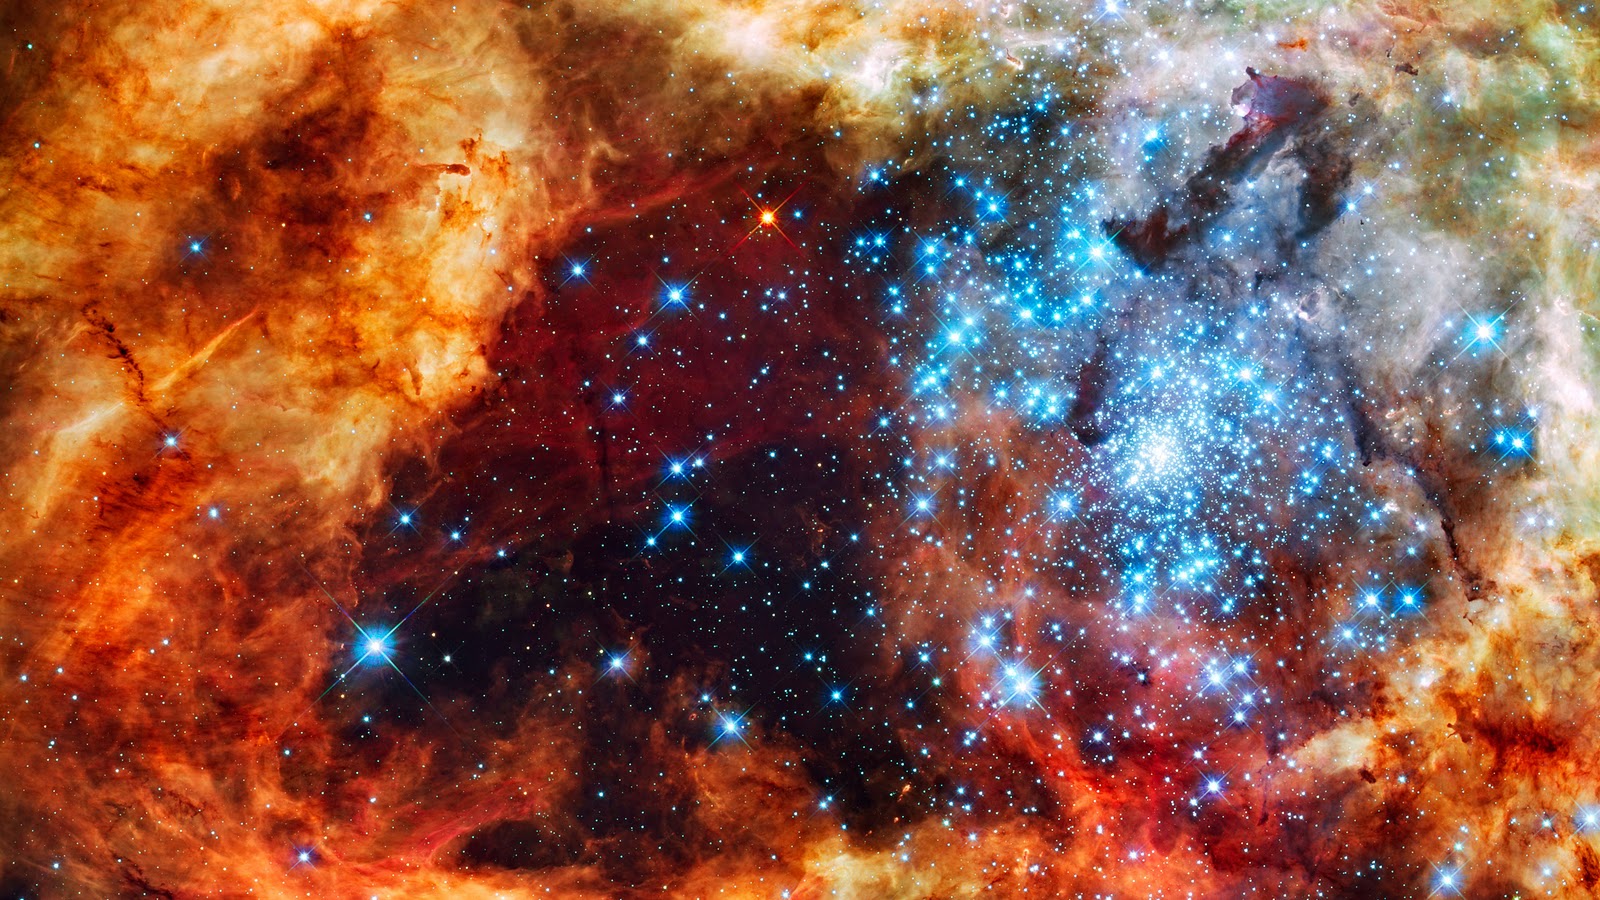 Galaxy Hubble Space Wallpaper HD Download 1673 9430 Wallpaper Cool